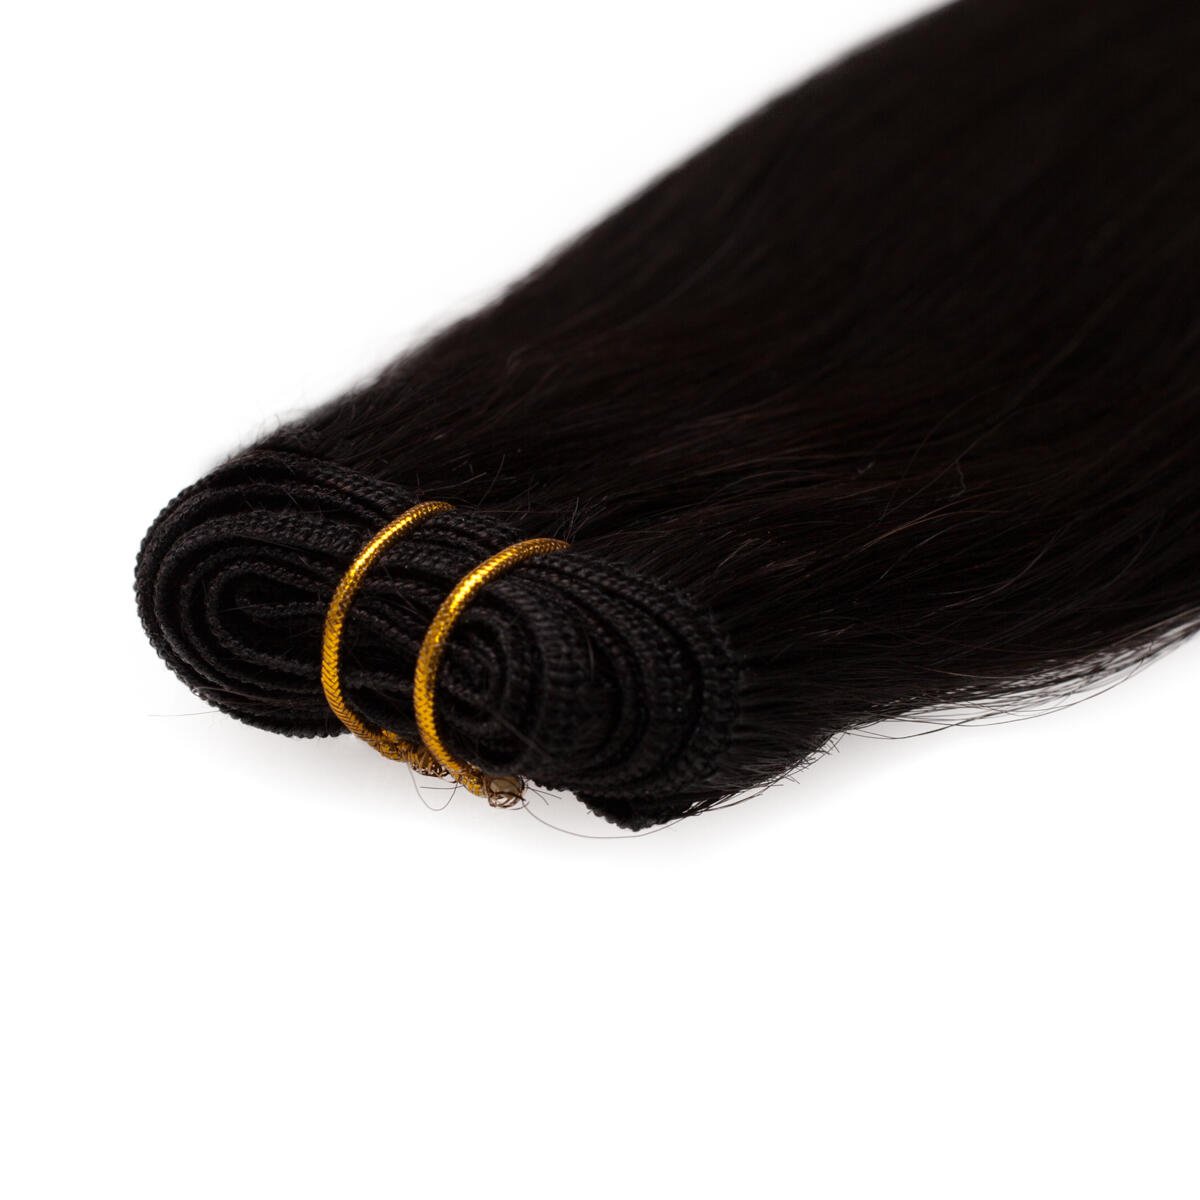 Hair Weft Original 1.2 Black Brown 50 cm